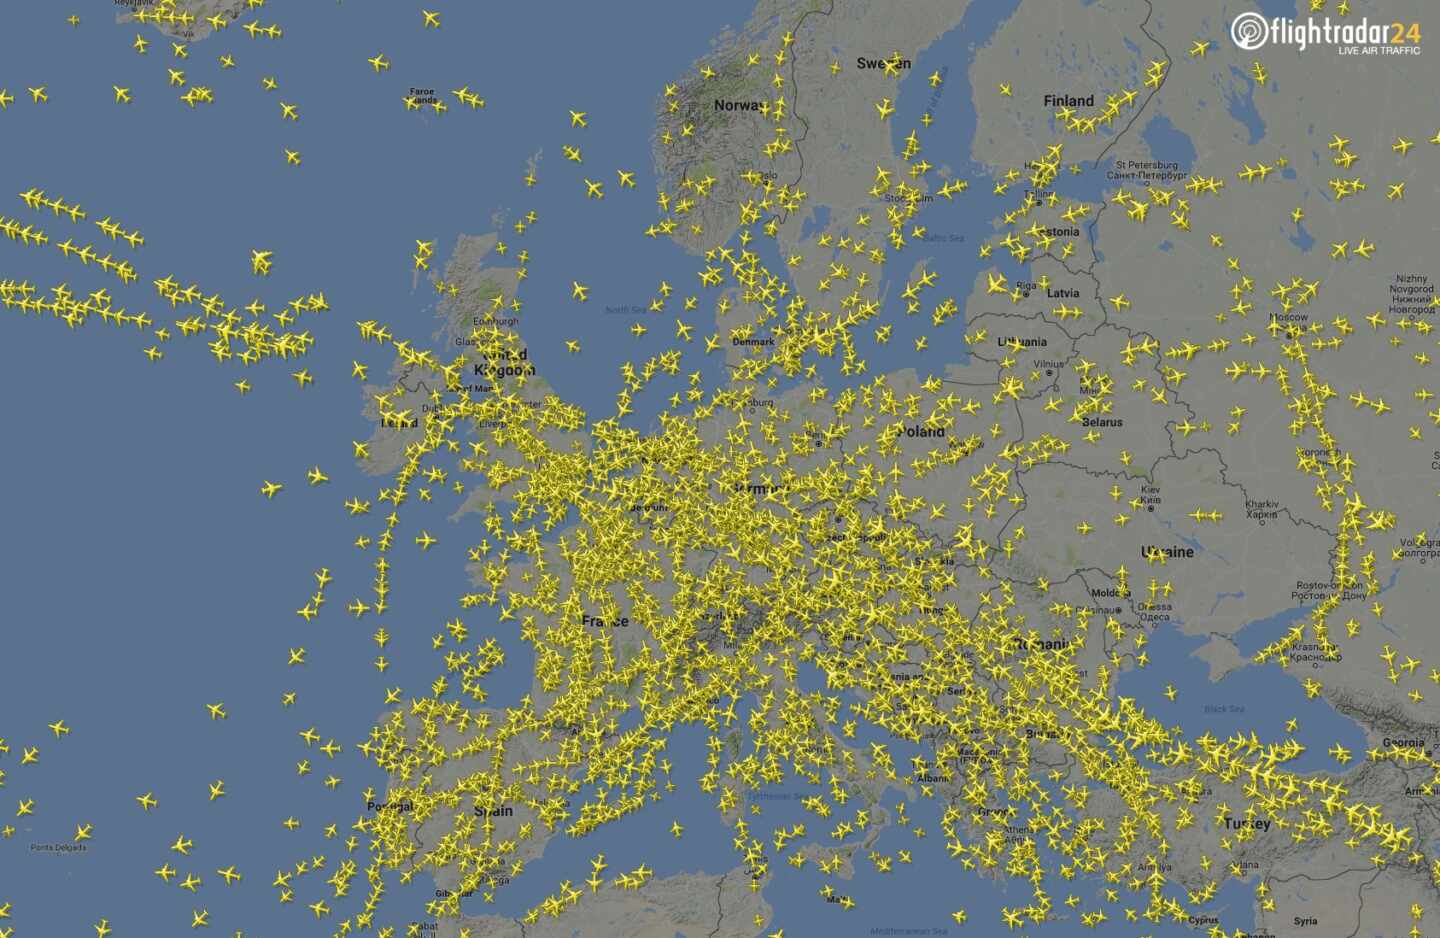 Mapa de localización de vuelos en Europa.